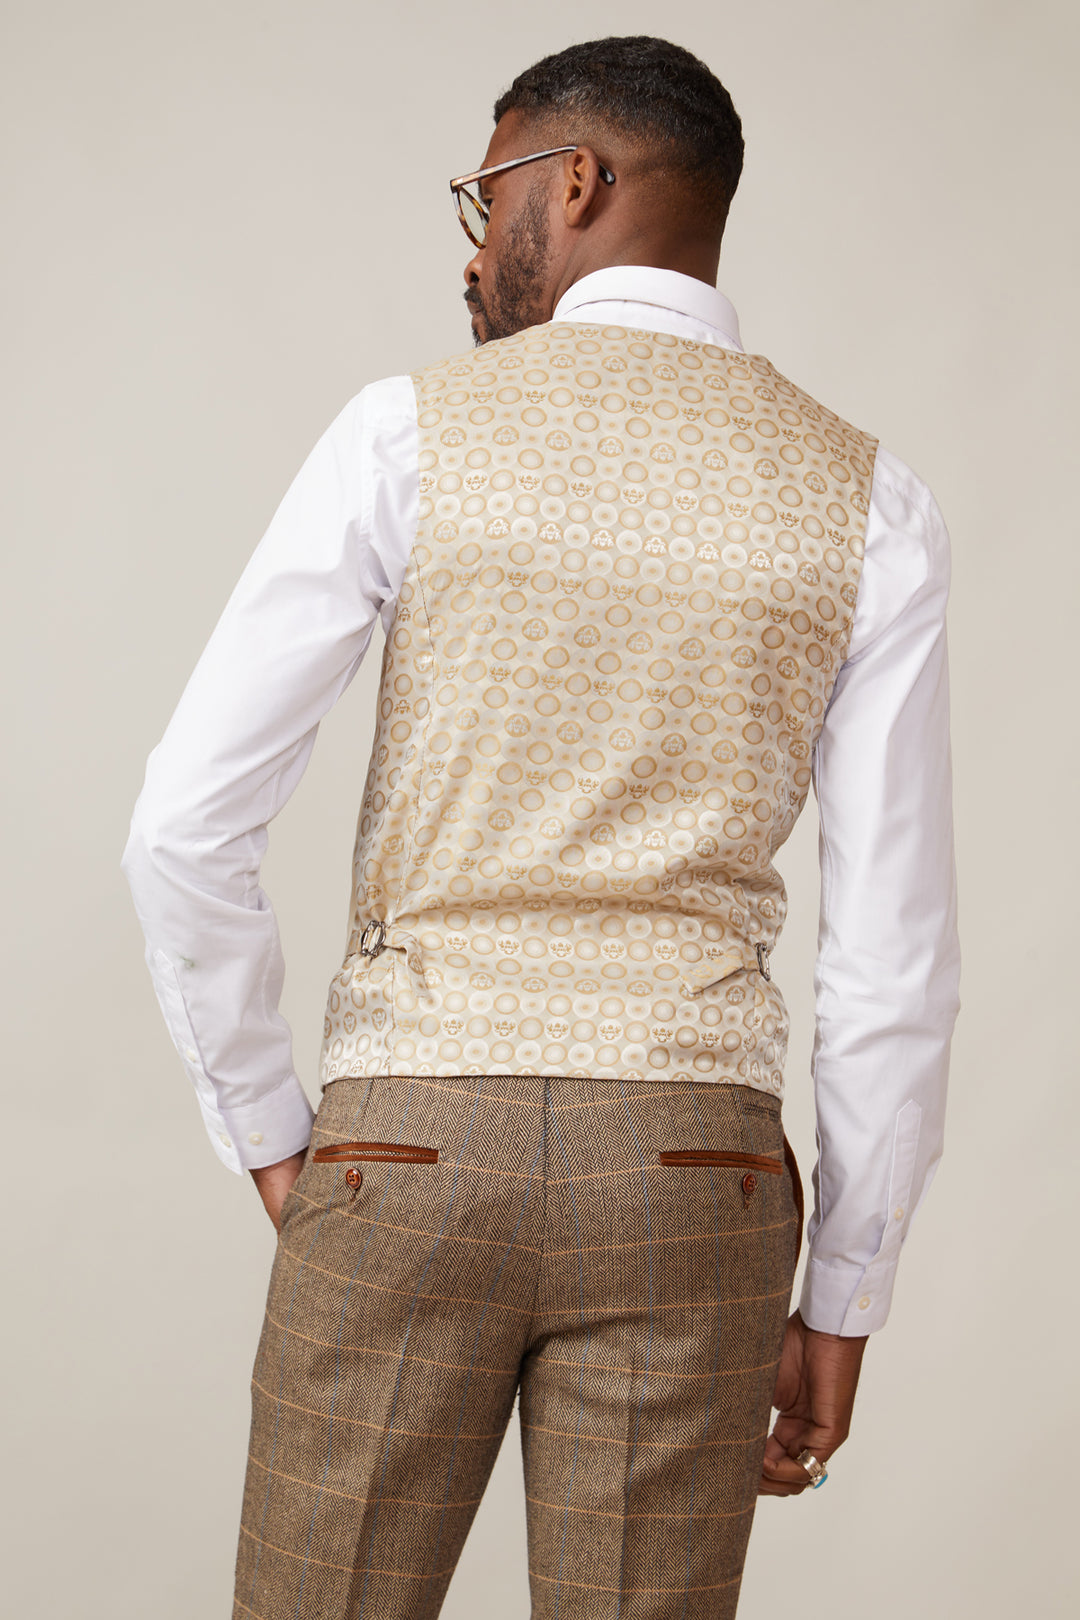 TED - Tan Tweed Check Suit with Kelvin Cream Waistcoat